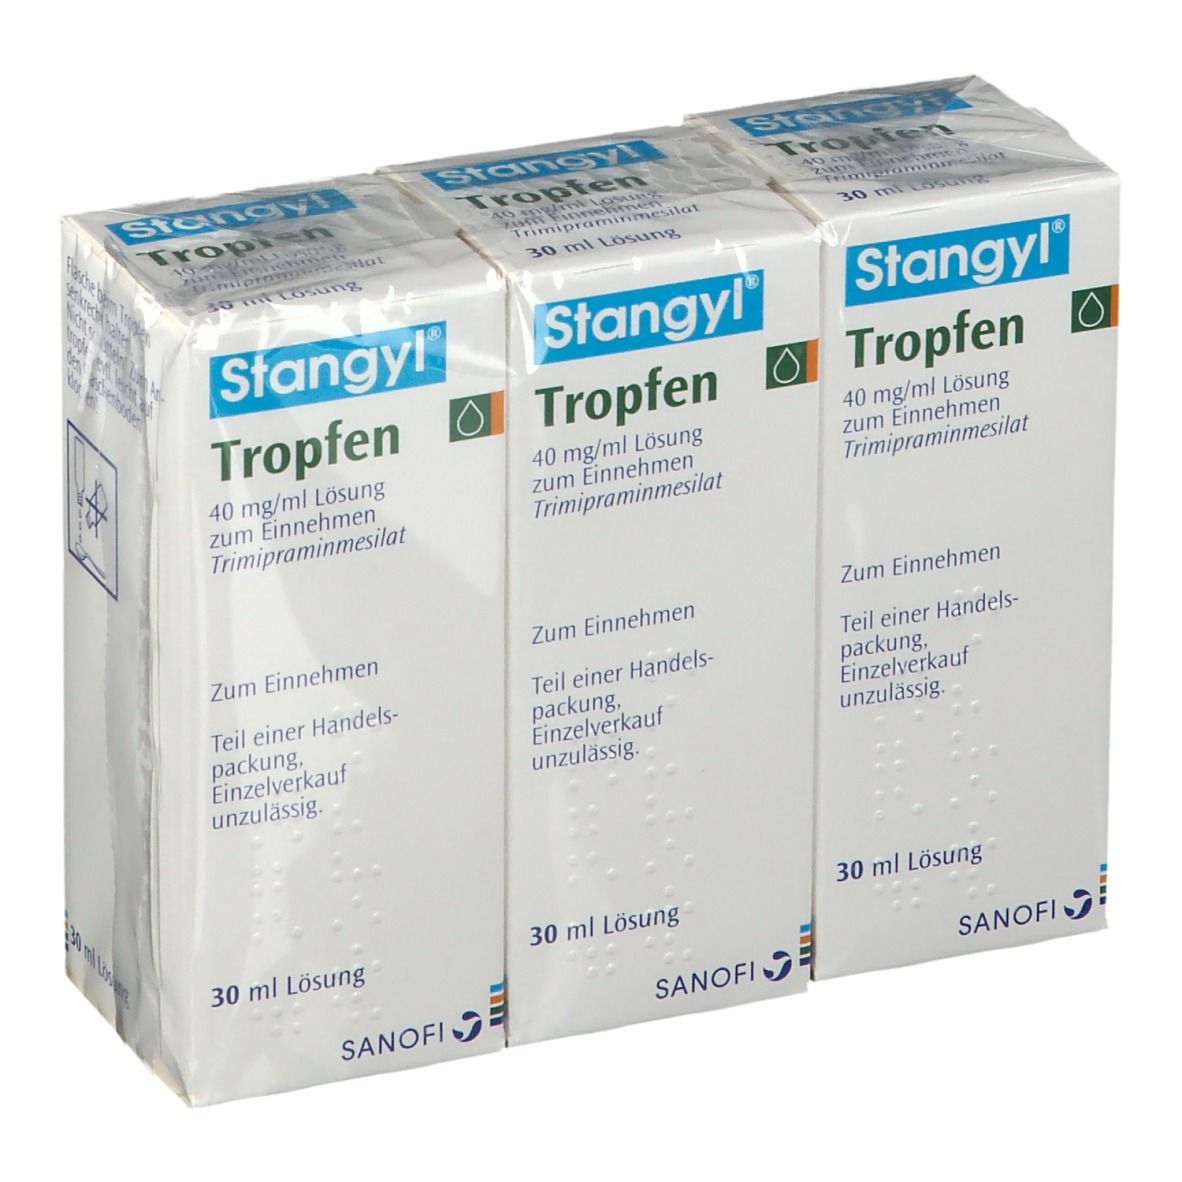 Stangyl® Tropfen 40 mg/ml